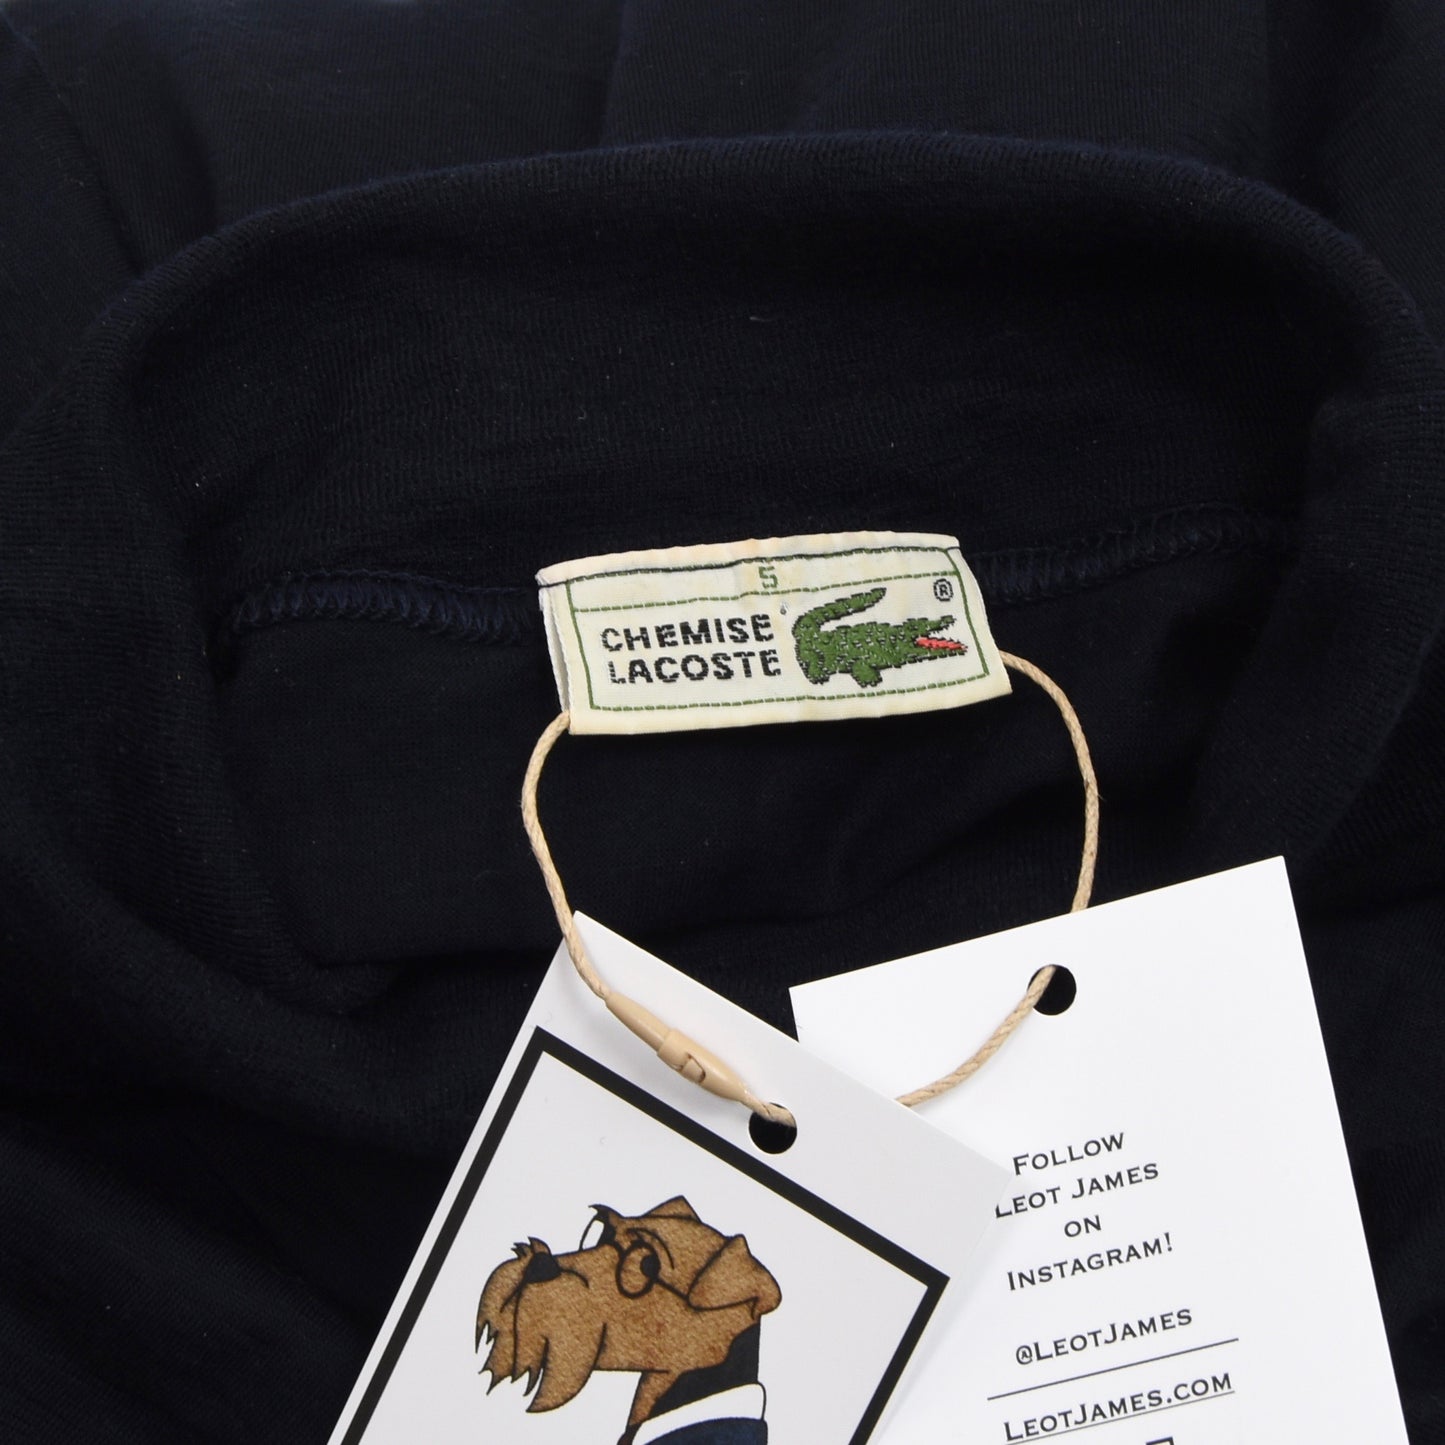 2x Vintage Lacoste Wool Turtleneck Sweaters Size 5 - Green & Navy Blue